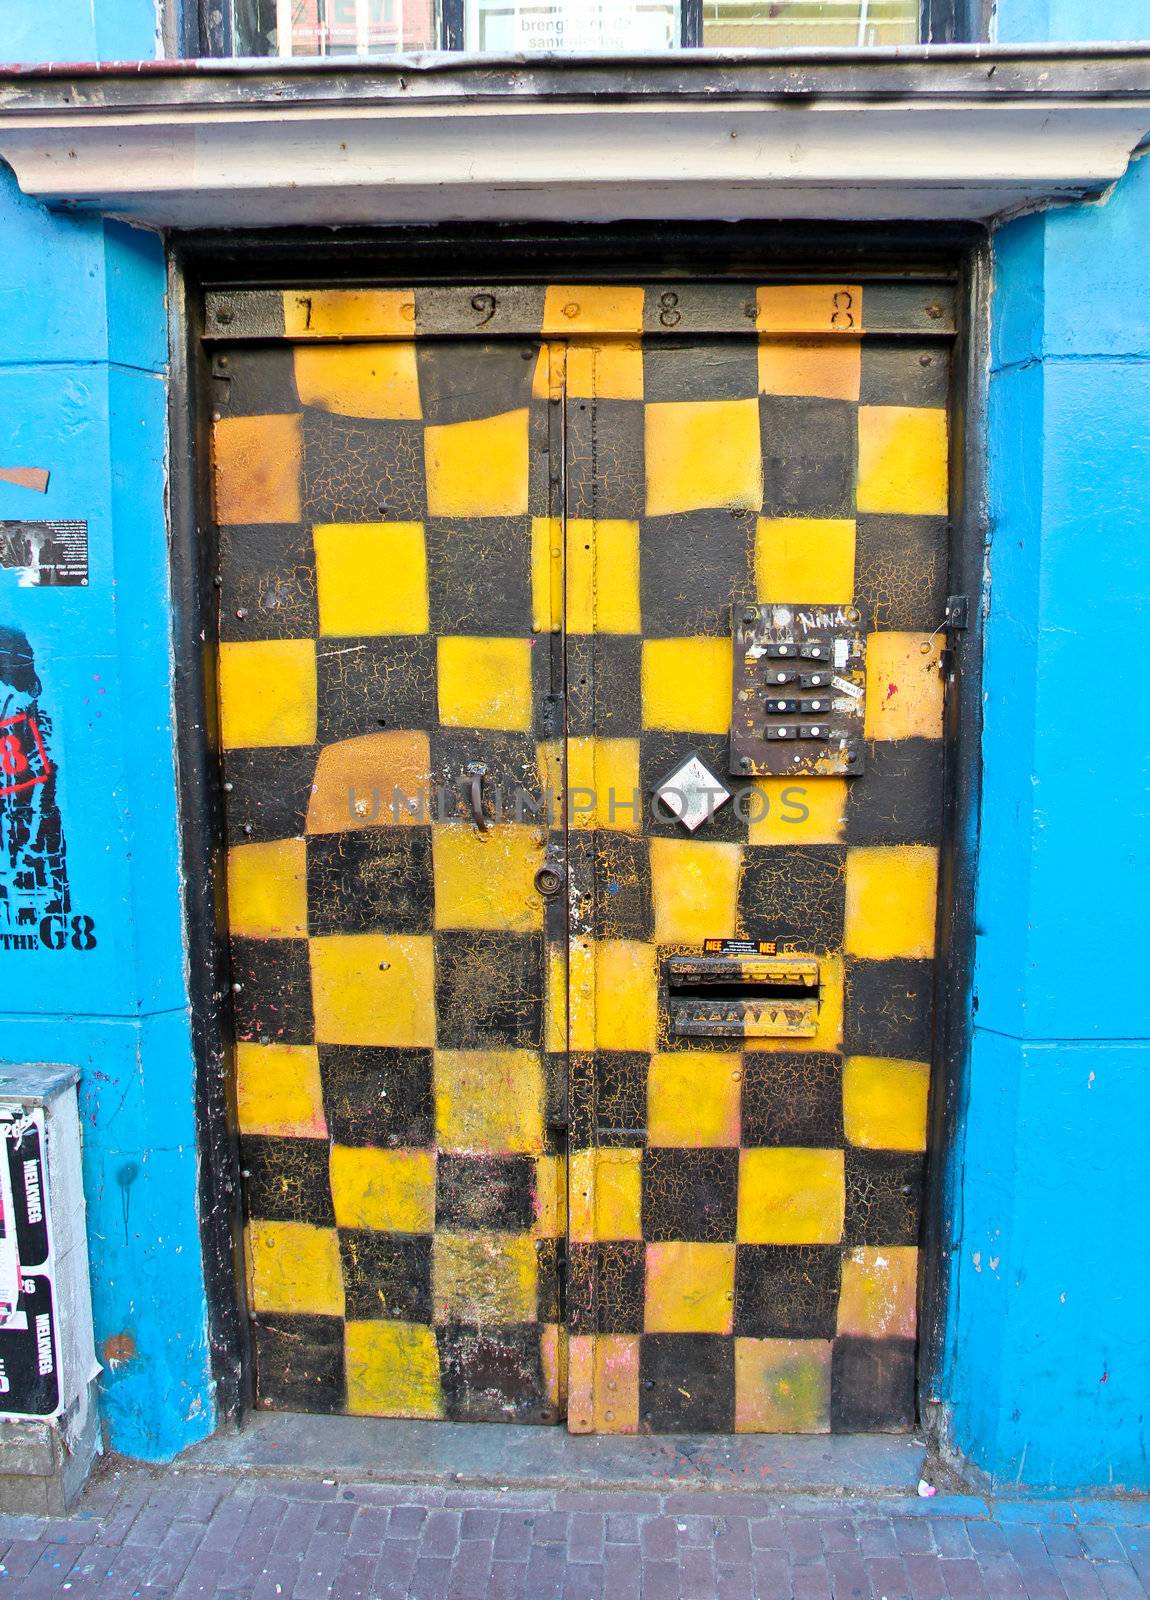 Black and yellow squares graffiti in doorway in Spuistraat, Amsterdam.